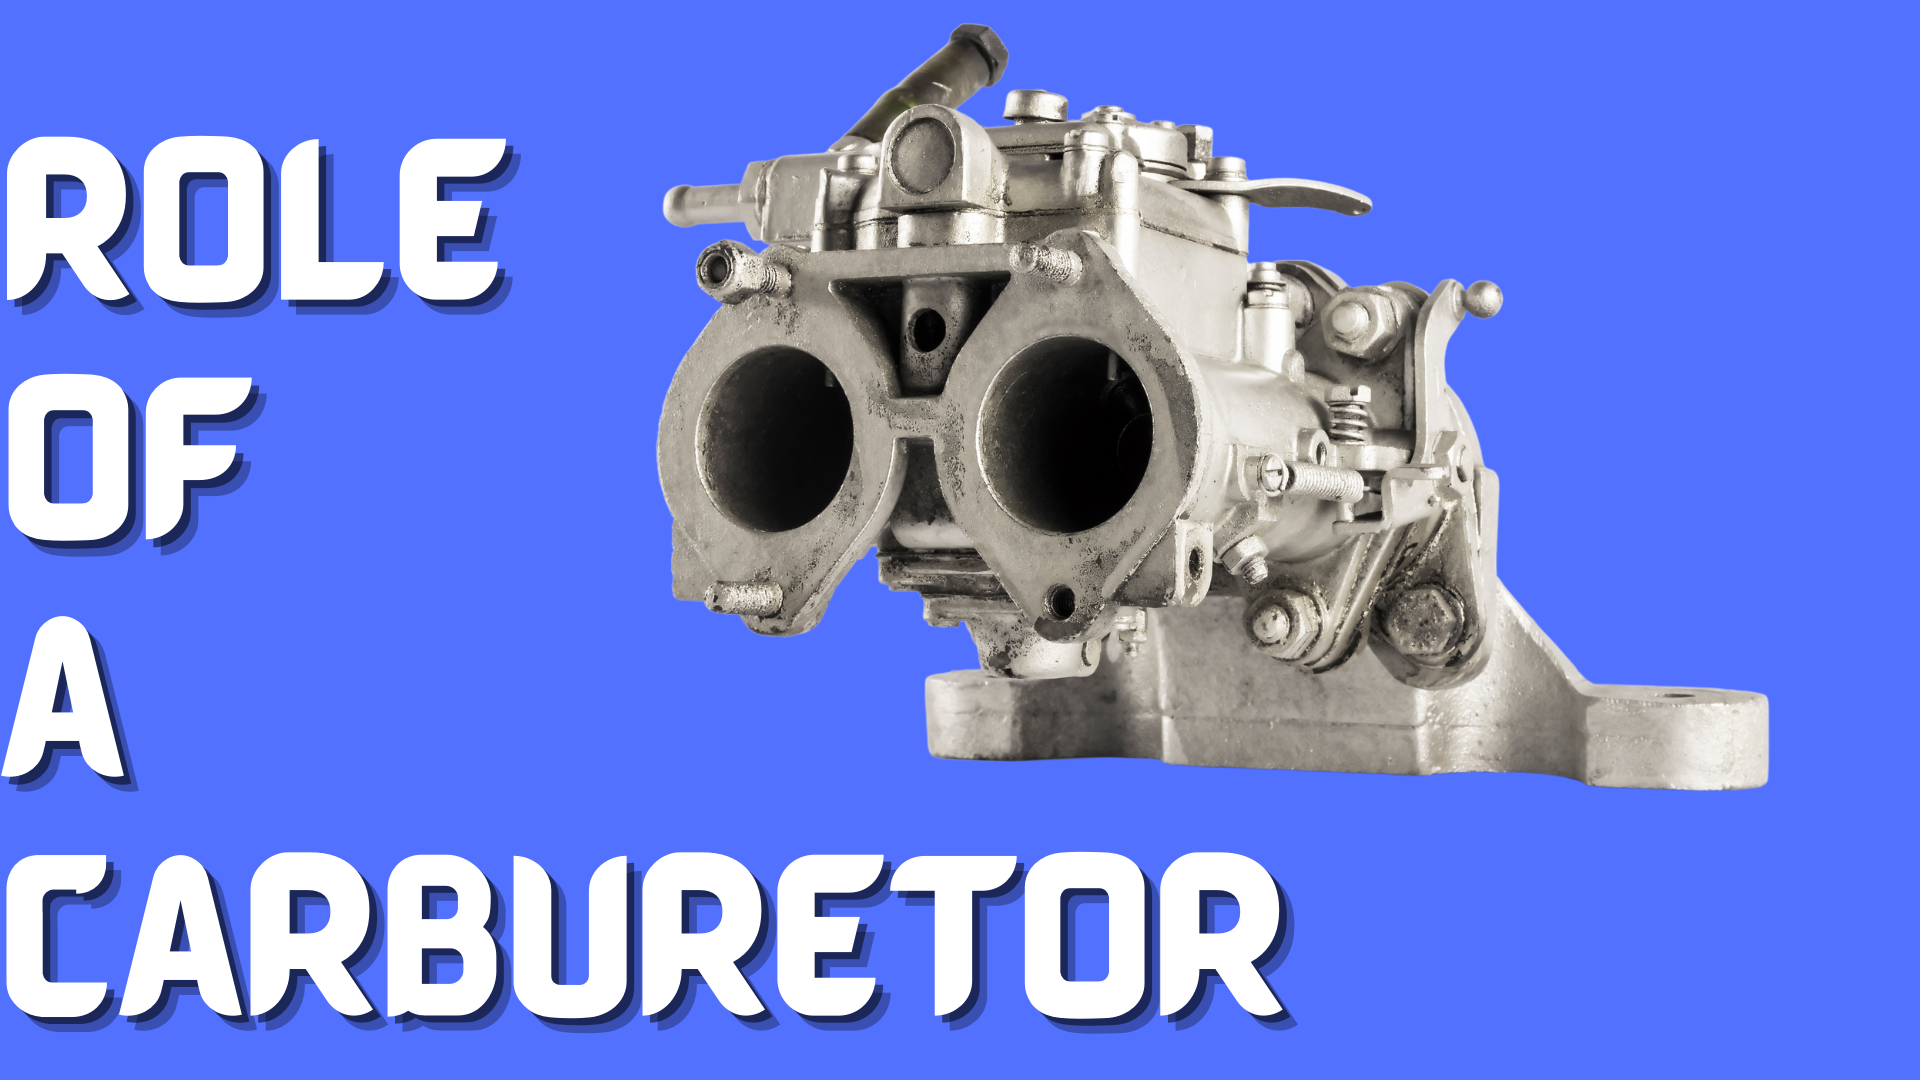 Role of a Carburetor